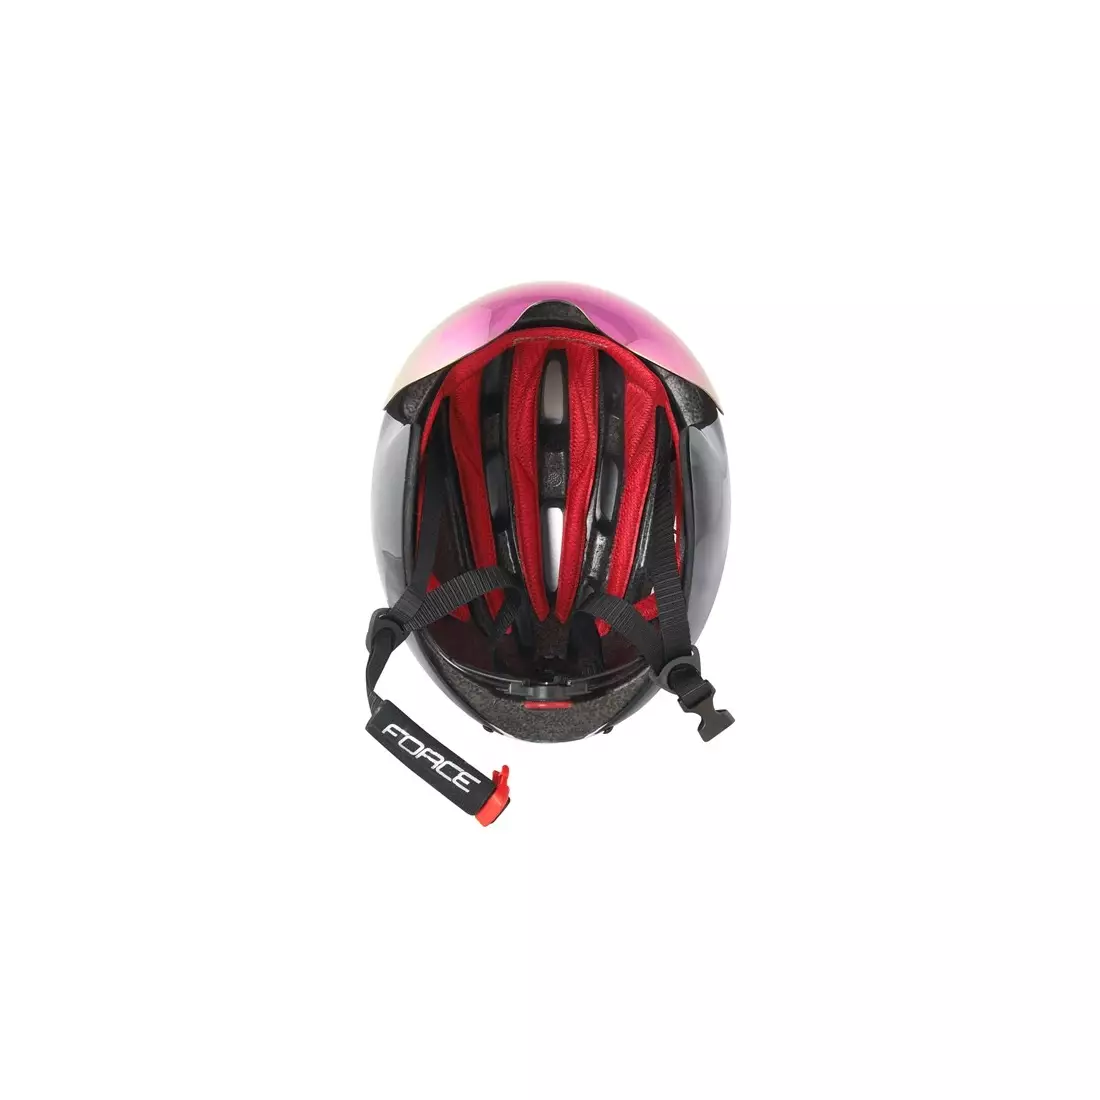 FORCE GLOBE Cyklistická helma black-white 